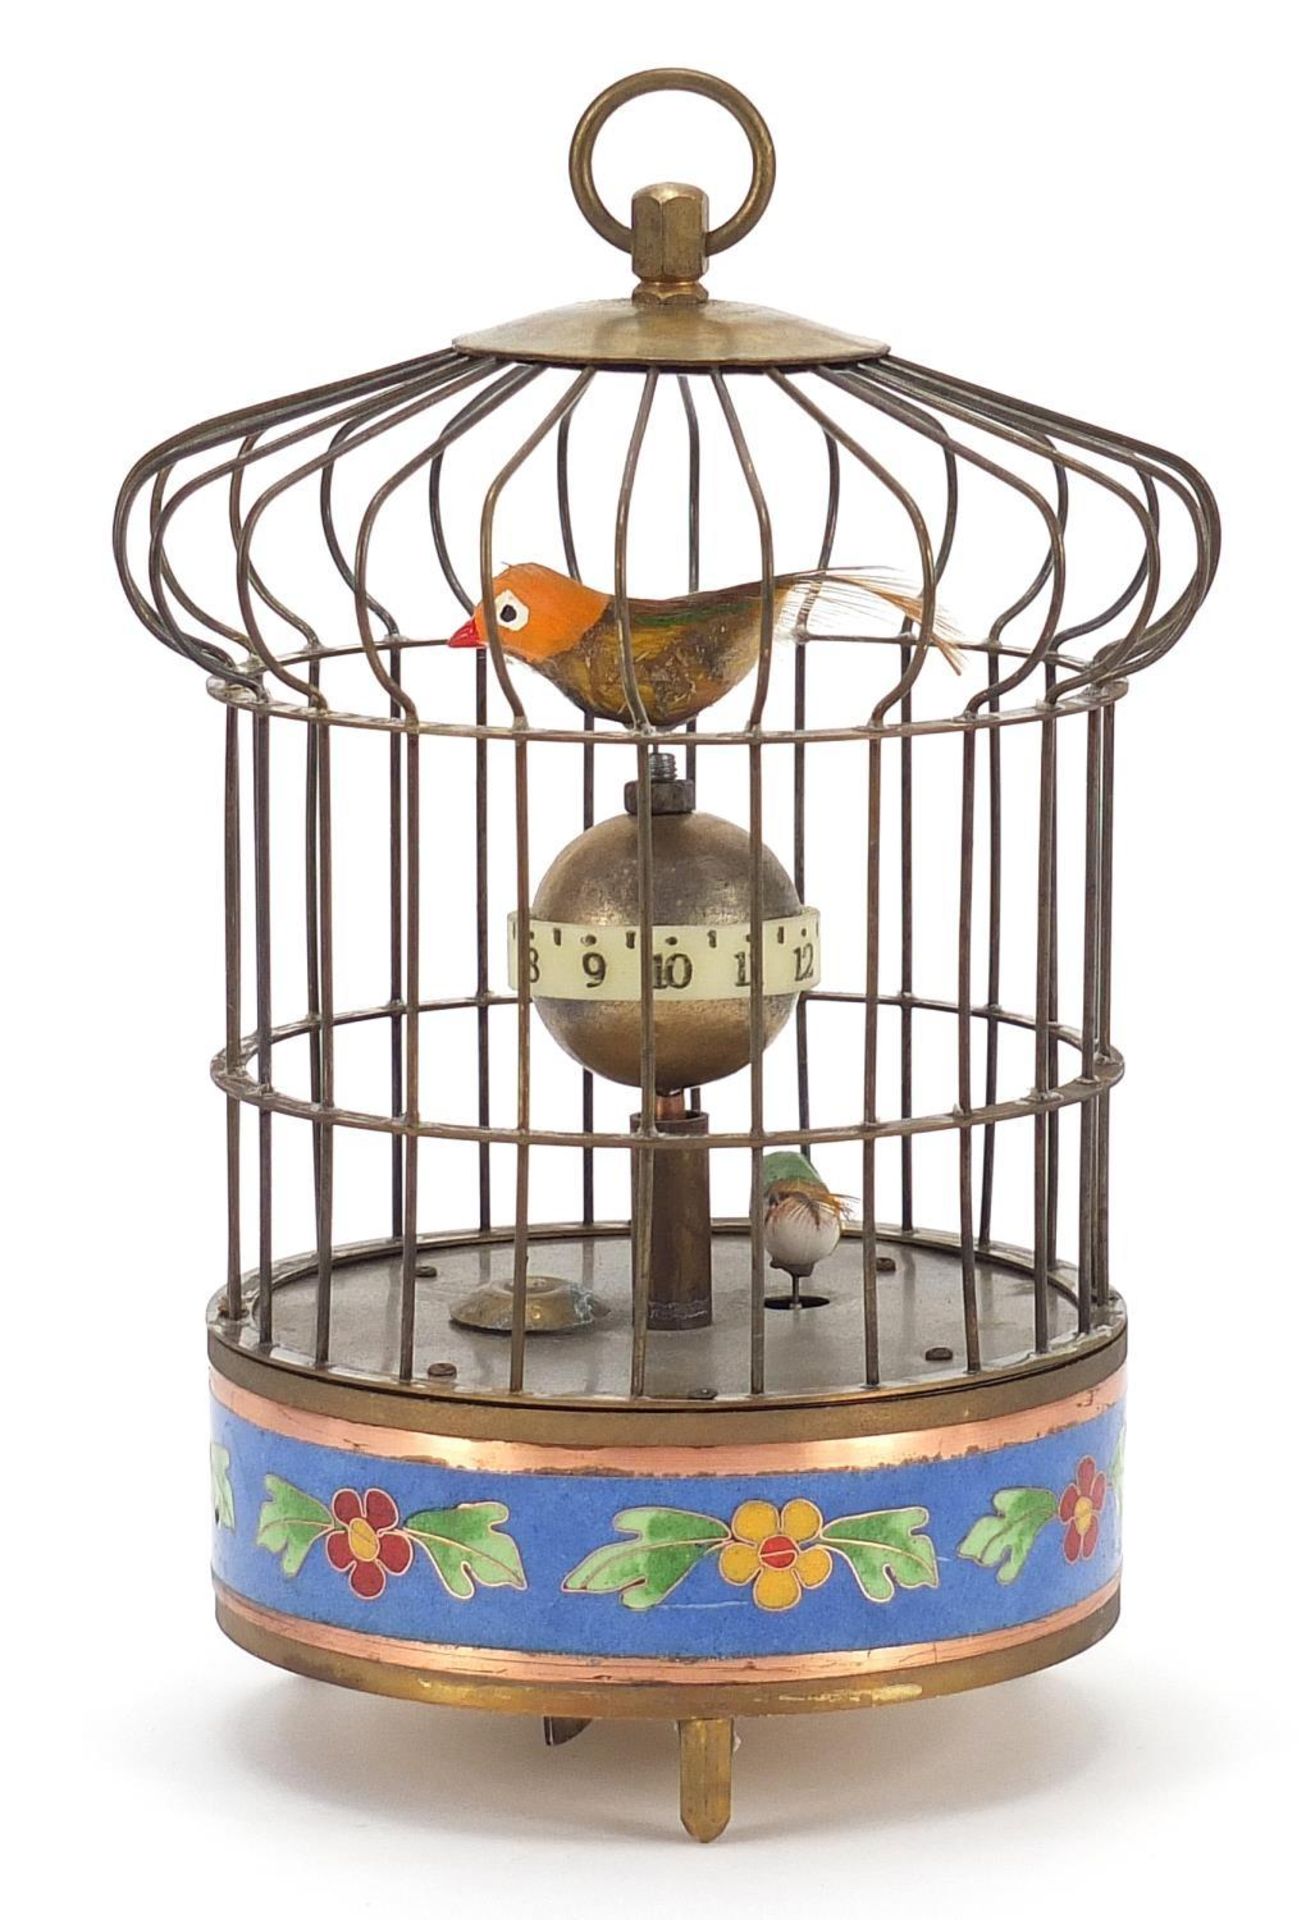 Brass clockwork automaton bird cage alarm clock with cloisonné band, 21cm high : - Image 2 of 3